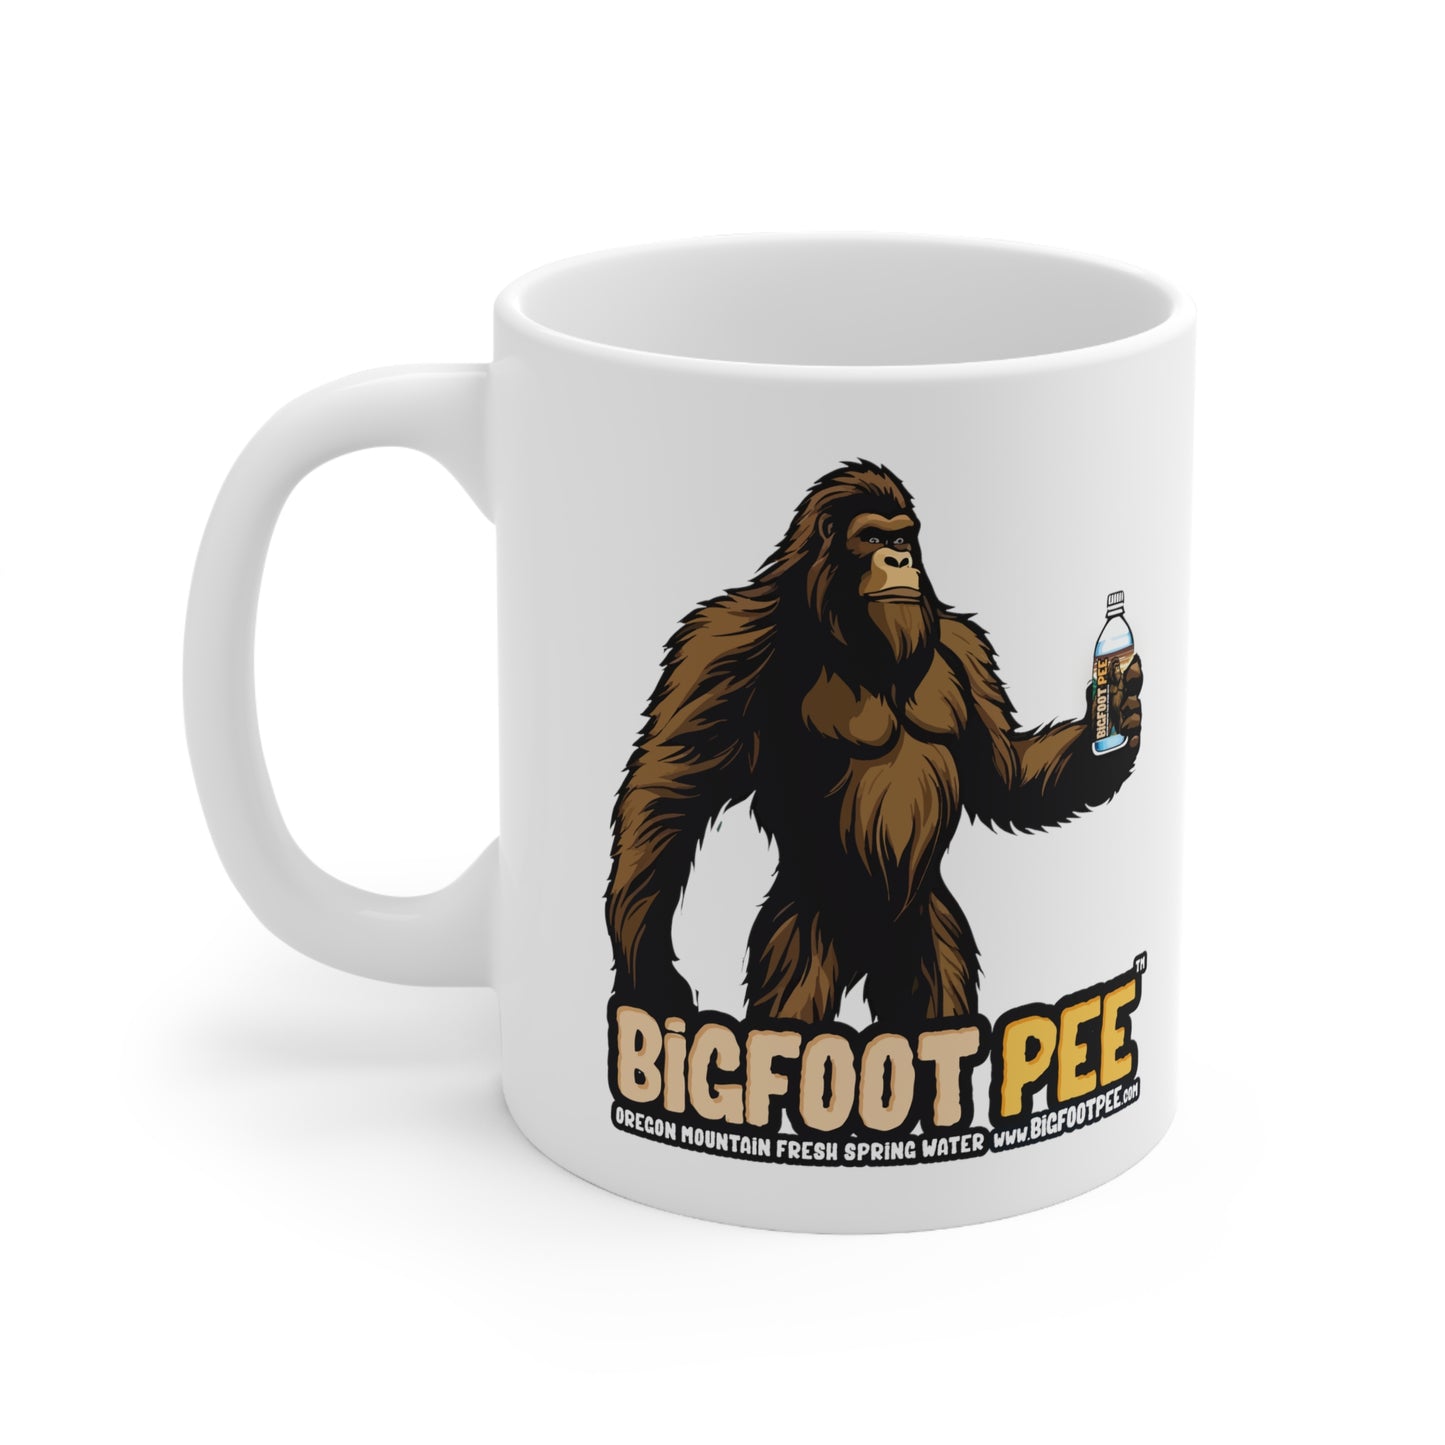 Bigfoot Pee Ceramic Mug 11oz